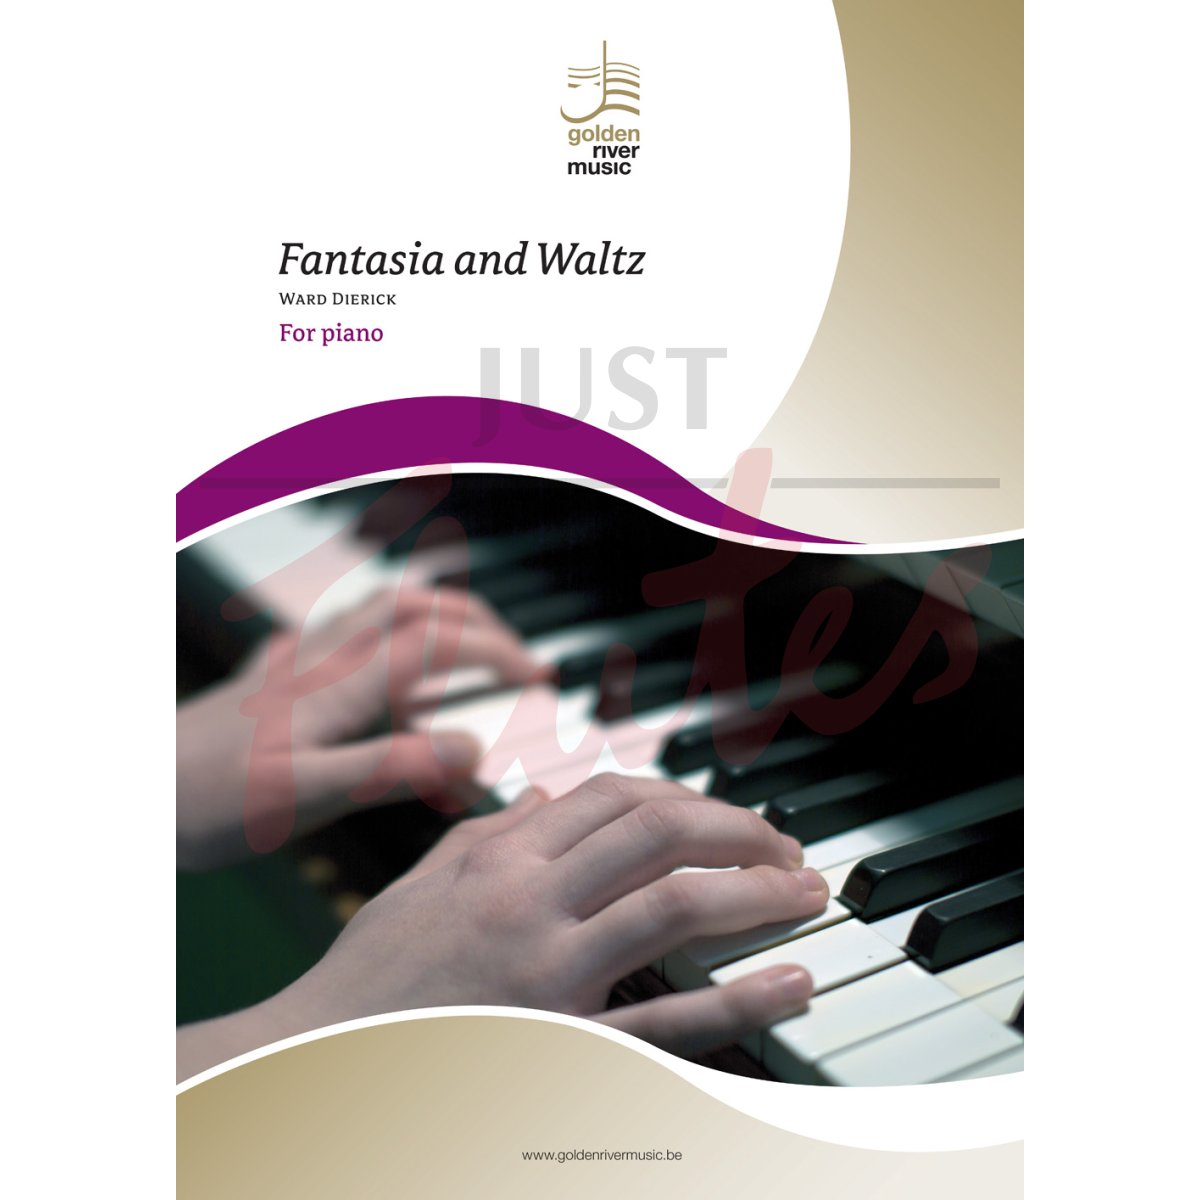 Fantasia and Waltz for Piano